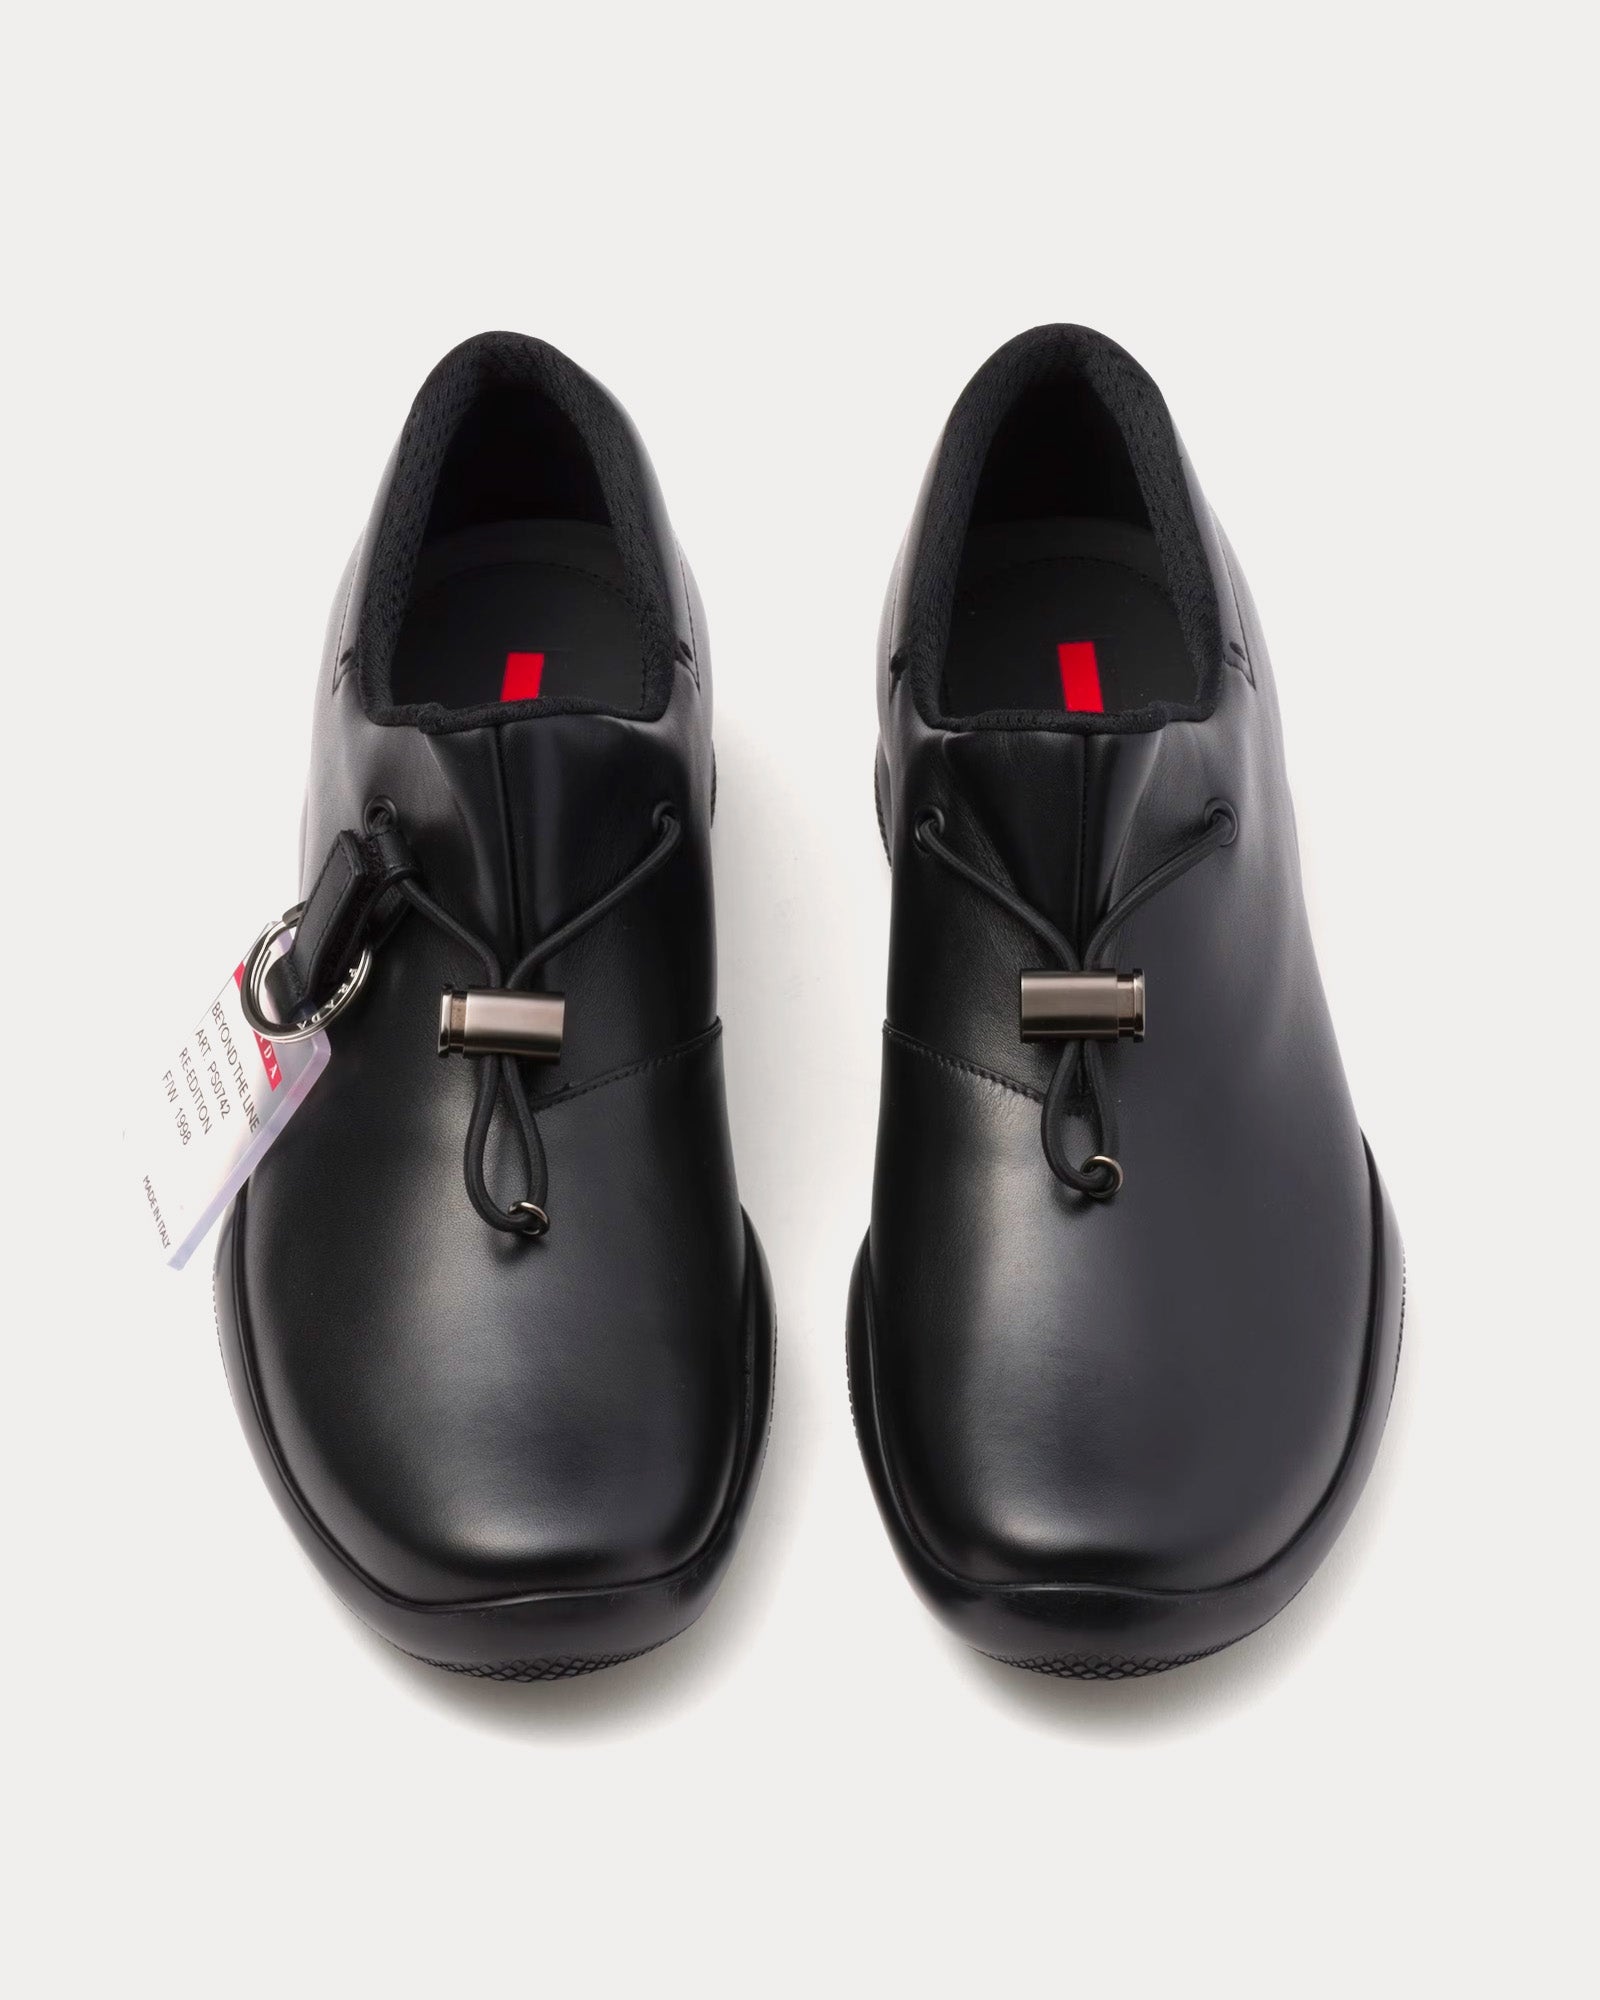 Prada - Toblach Leather Black Slip On Sneakers